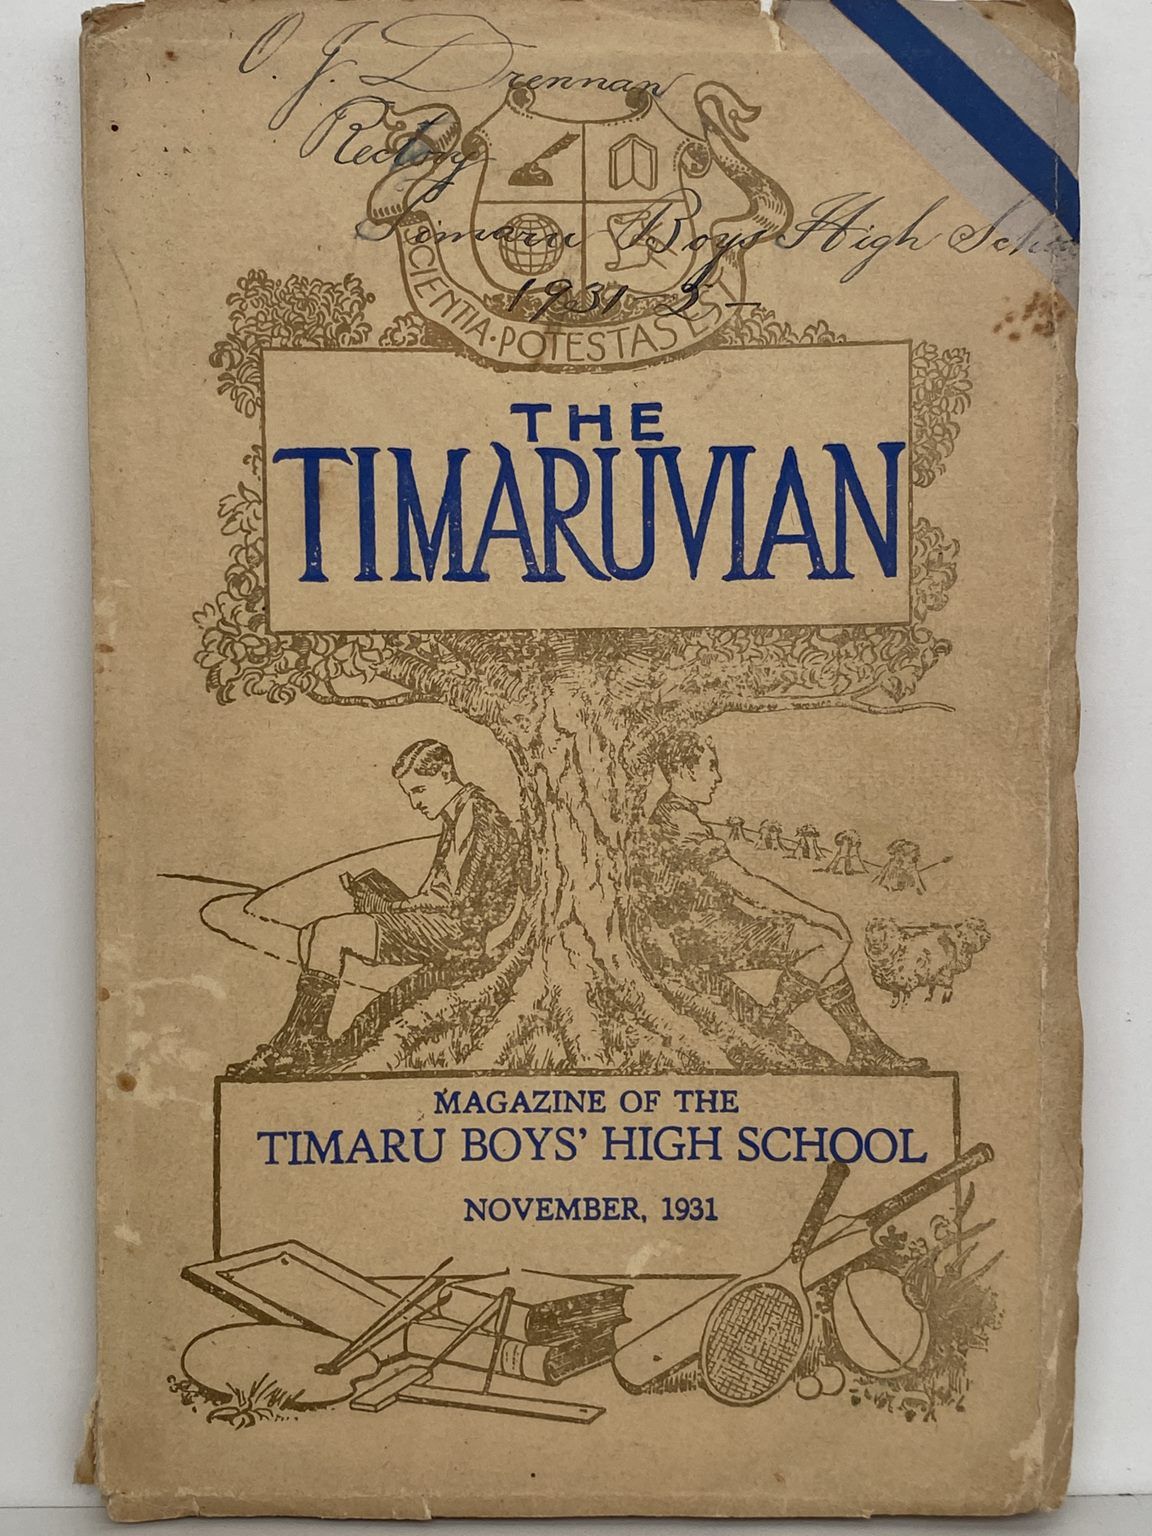 THE TIMARUVIAN: Magazine of the Timaru Boys' High School 1931